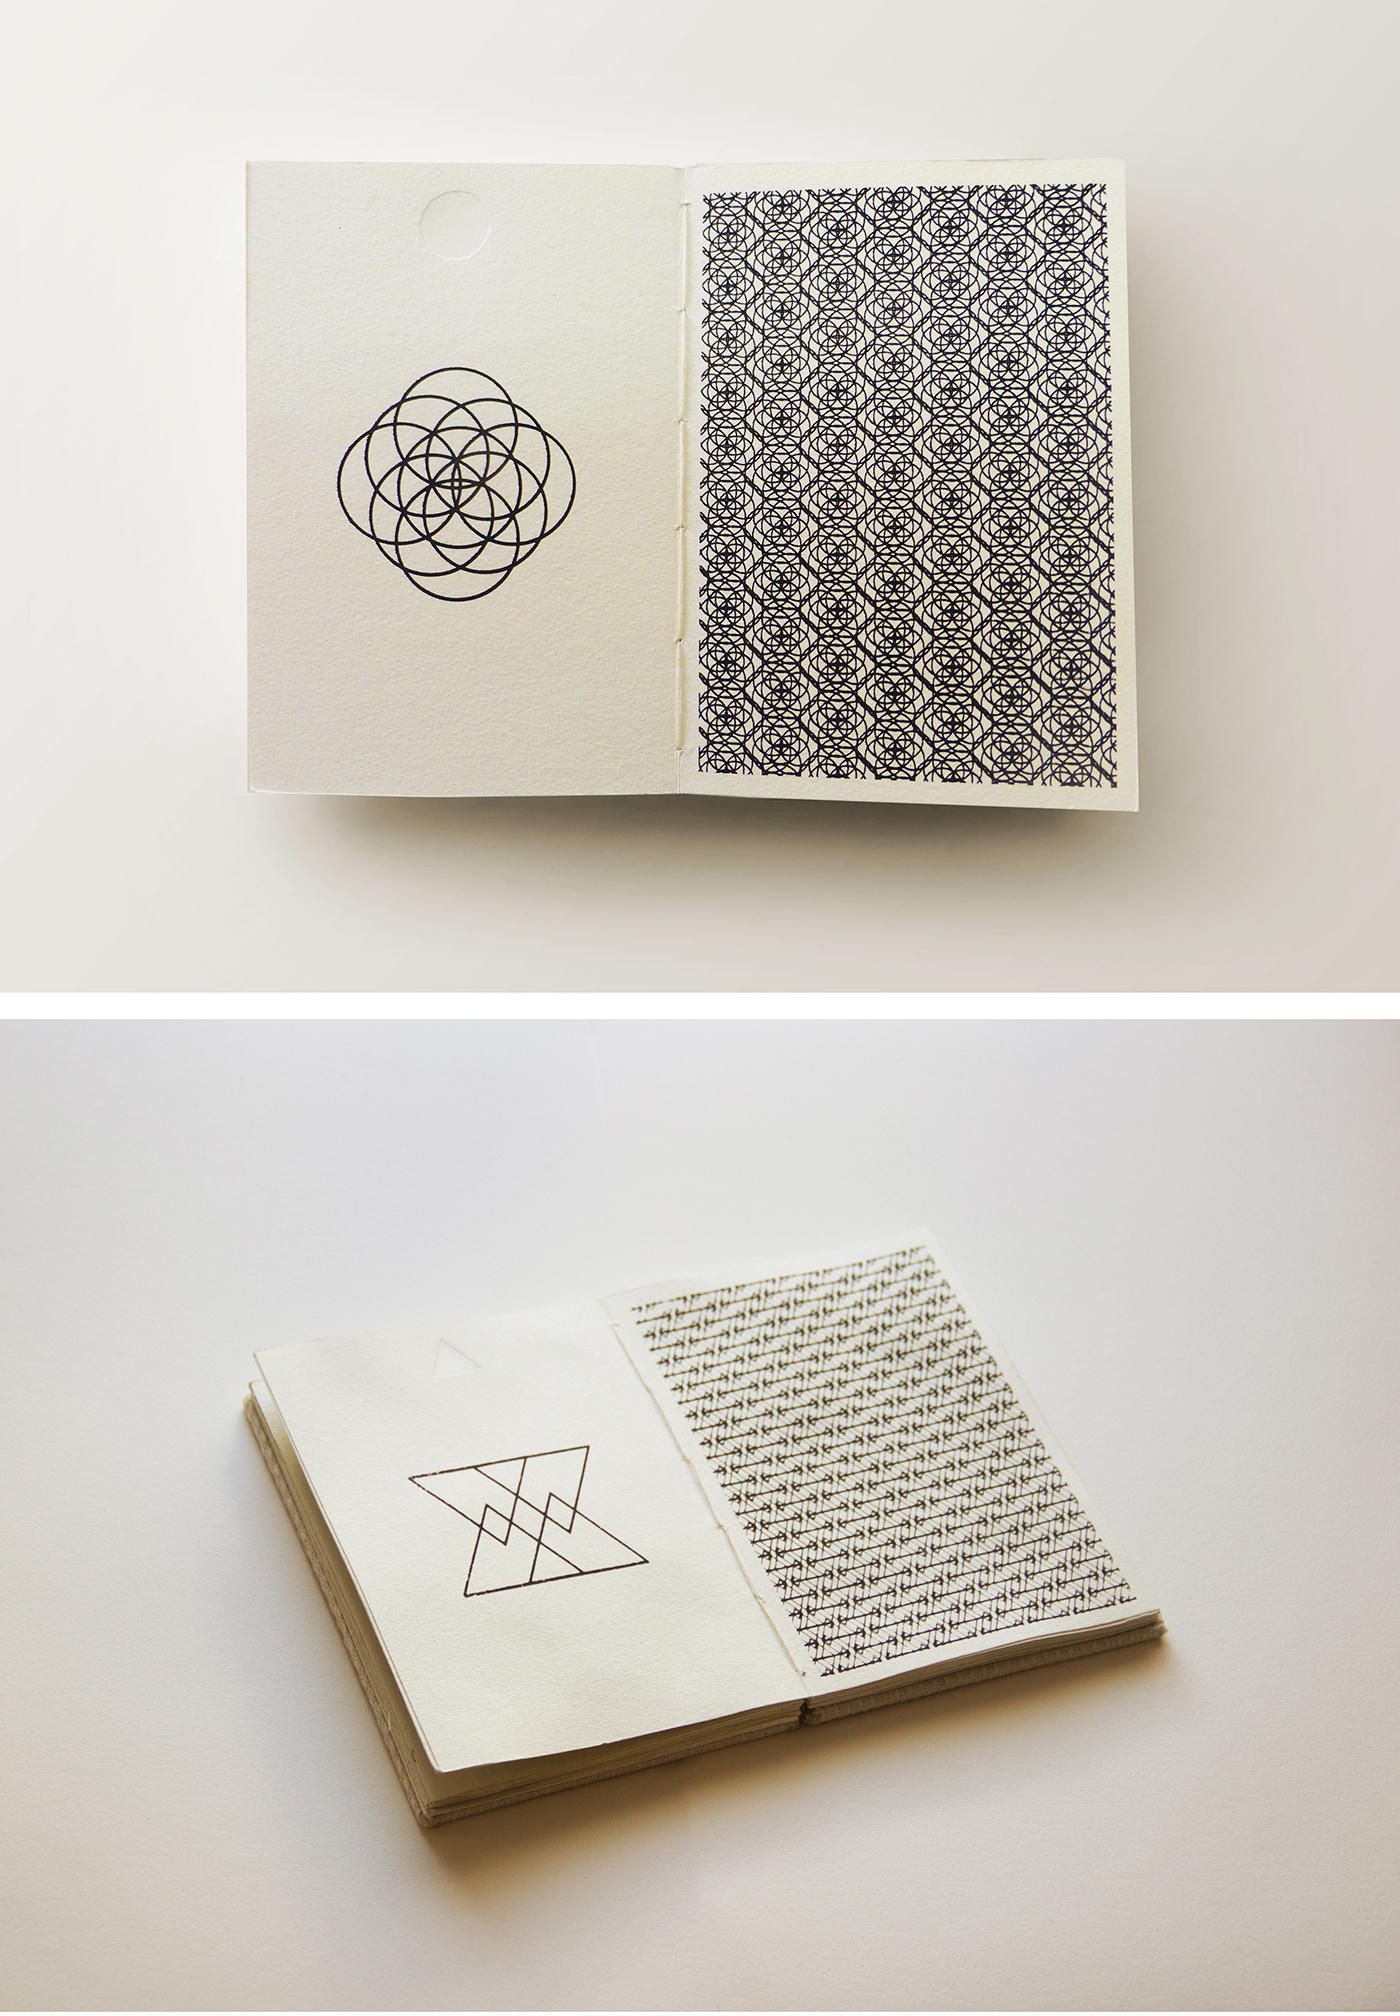 Artis´s book libro de artista book kaleidoscope craft cosido copto grabado pattern geometria serigrafia copto editorial